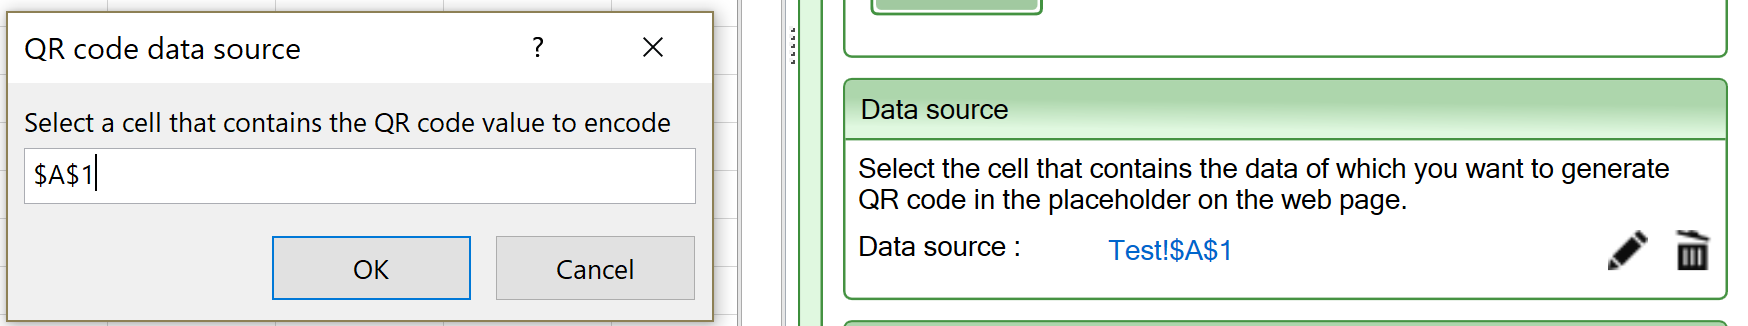 Screenshot of the Data source setting for the QR code widget